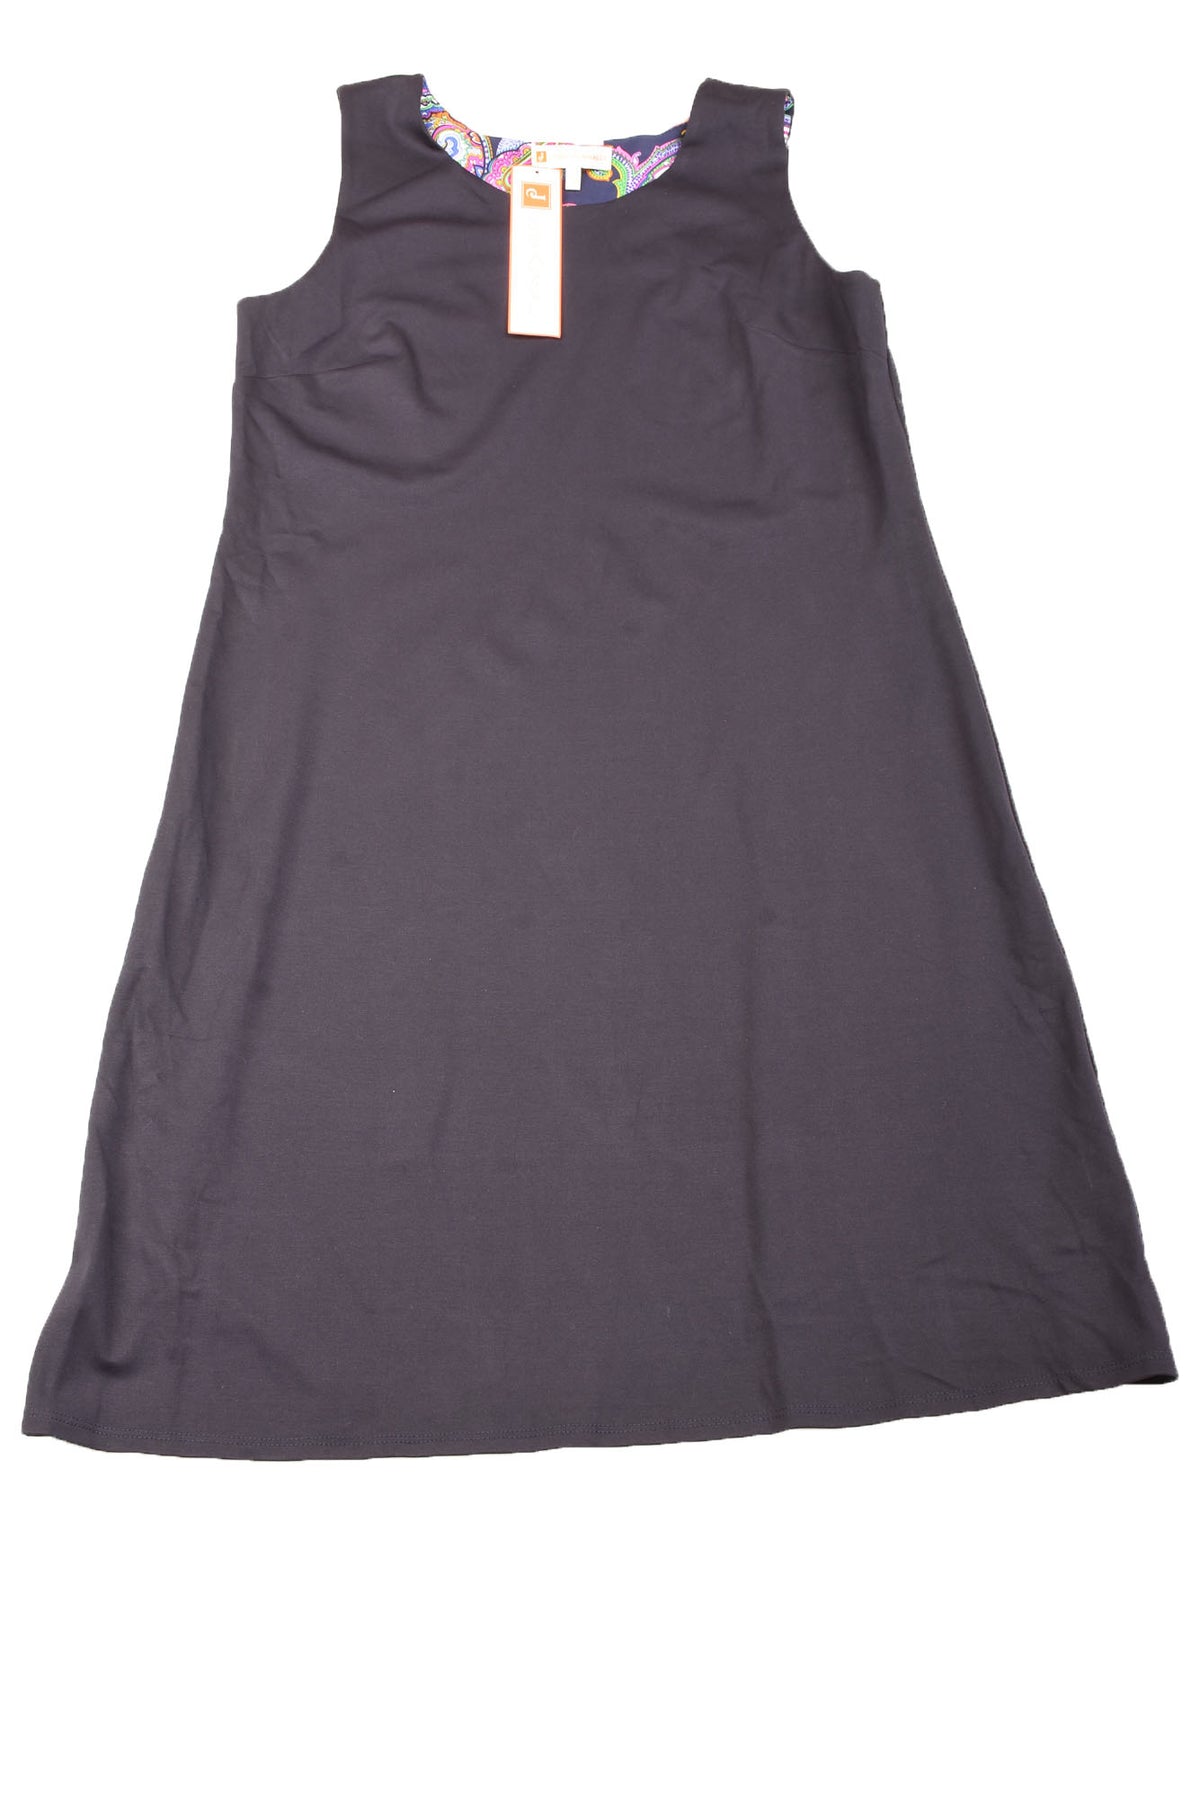 Jude Connally Size X-Large Women&#39;s Dress